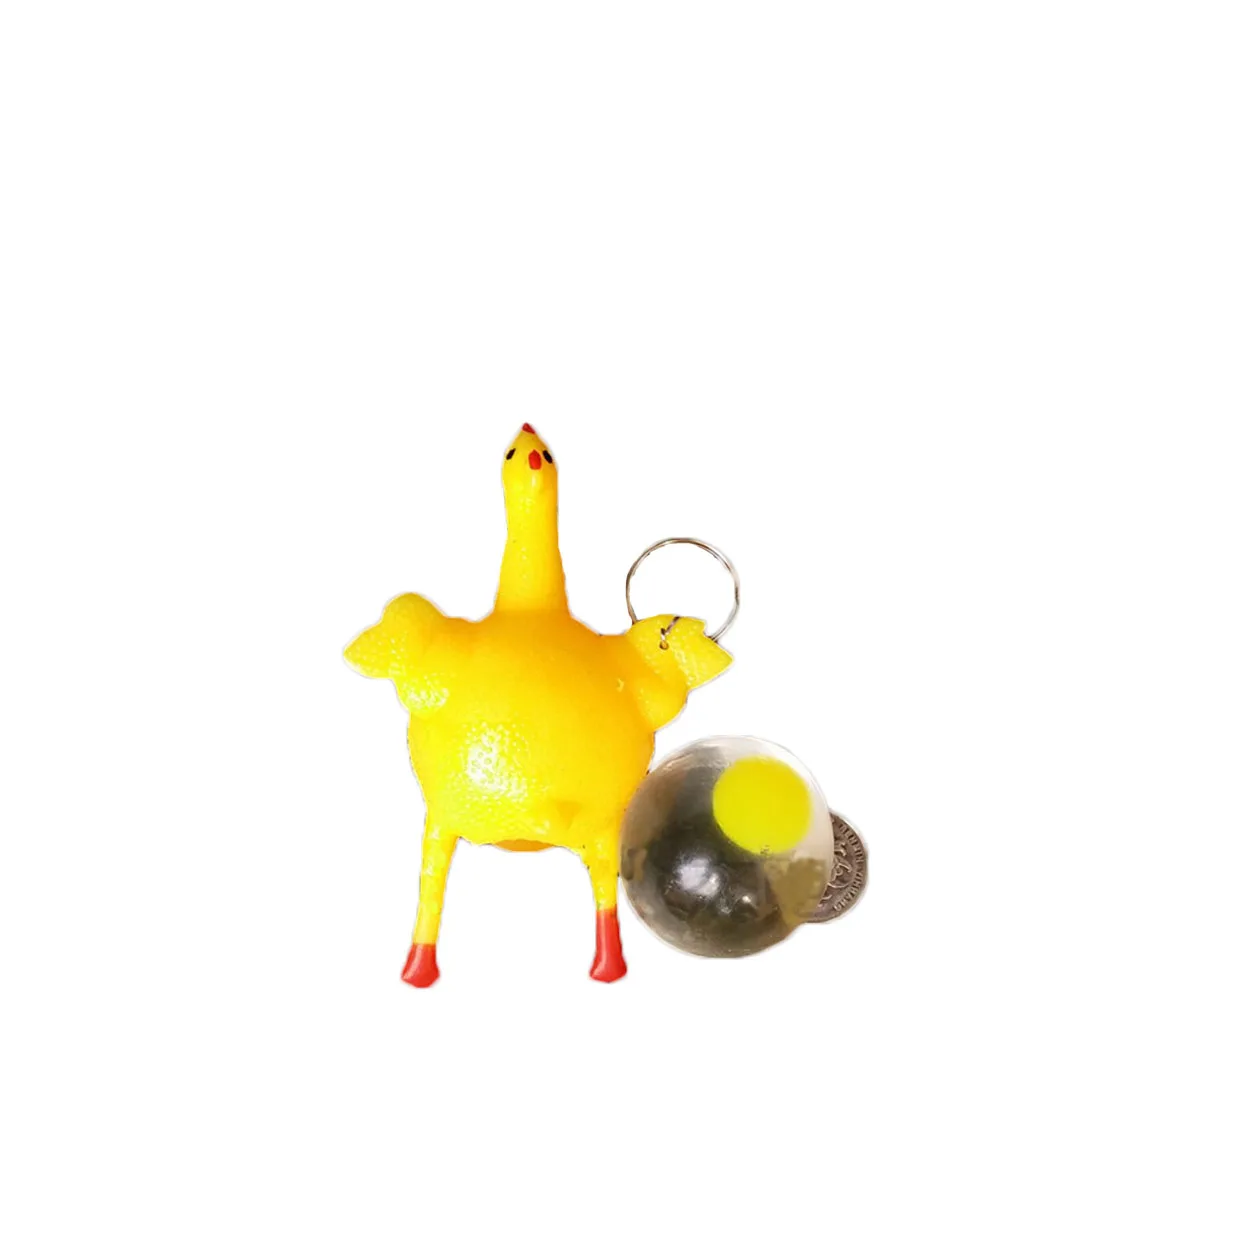 Хит продаж Chanycore Хэллоуин искусственная курица розыгрыш 1 шт. новинка забавные